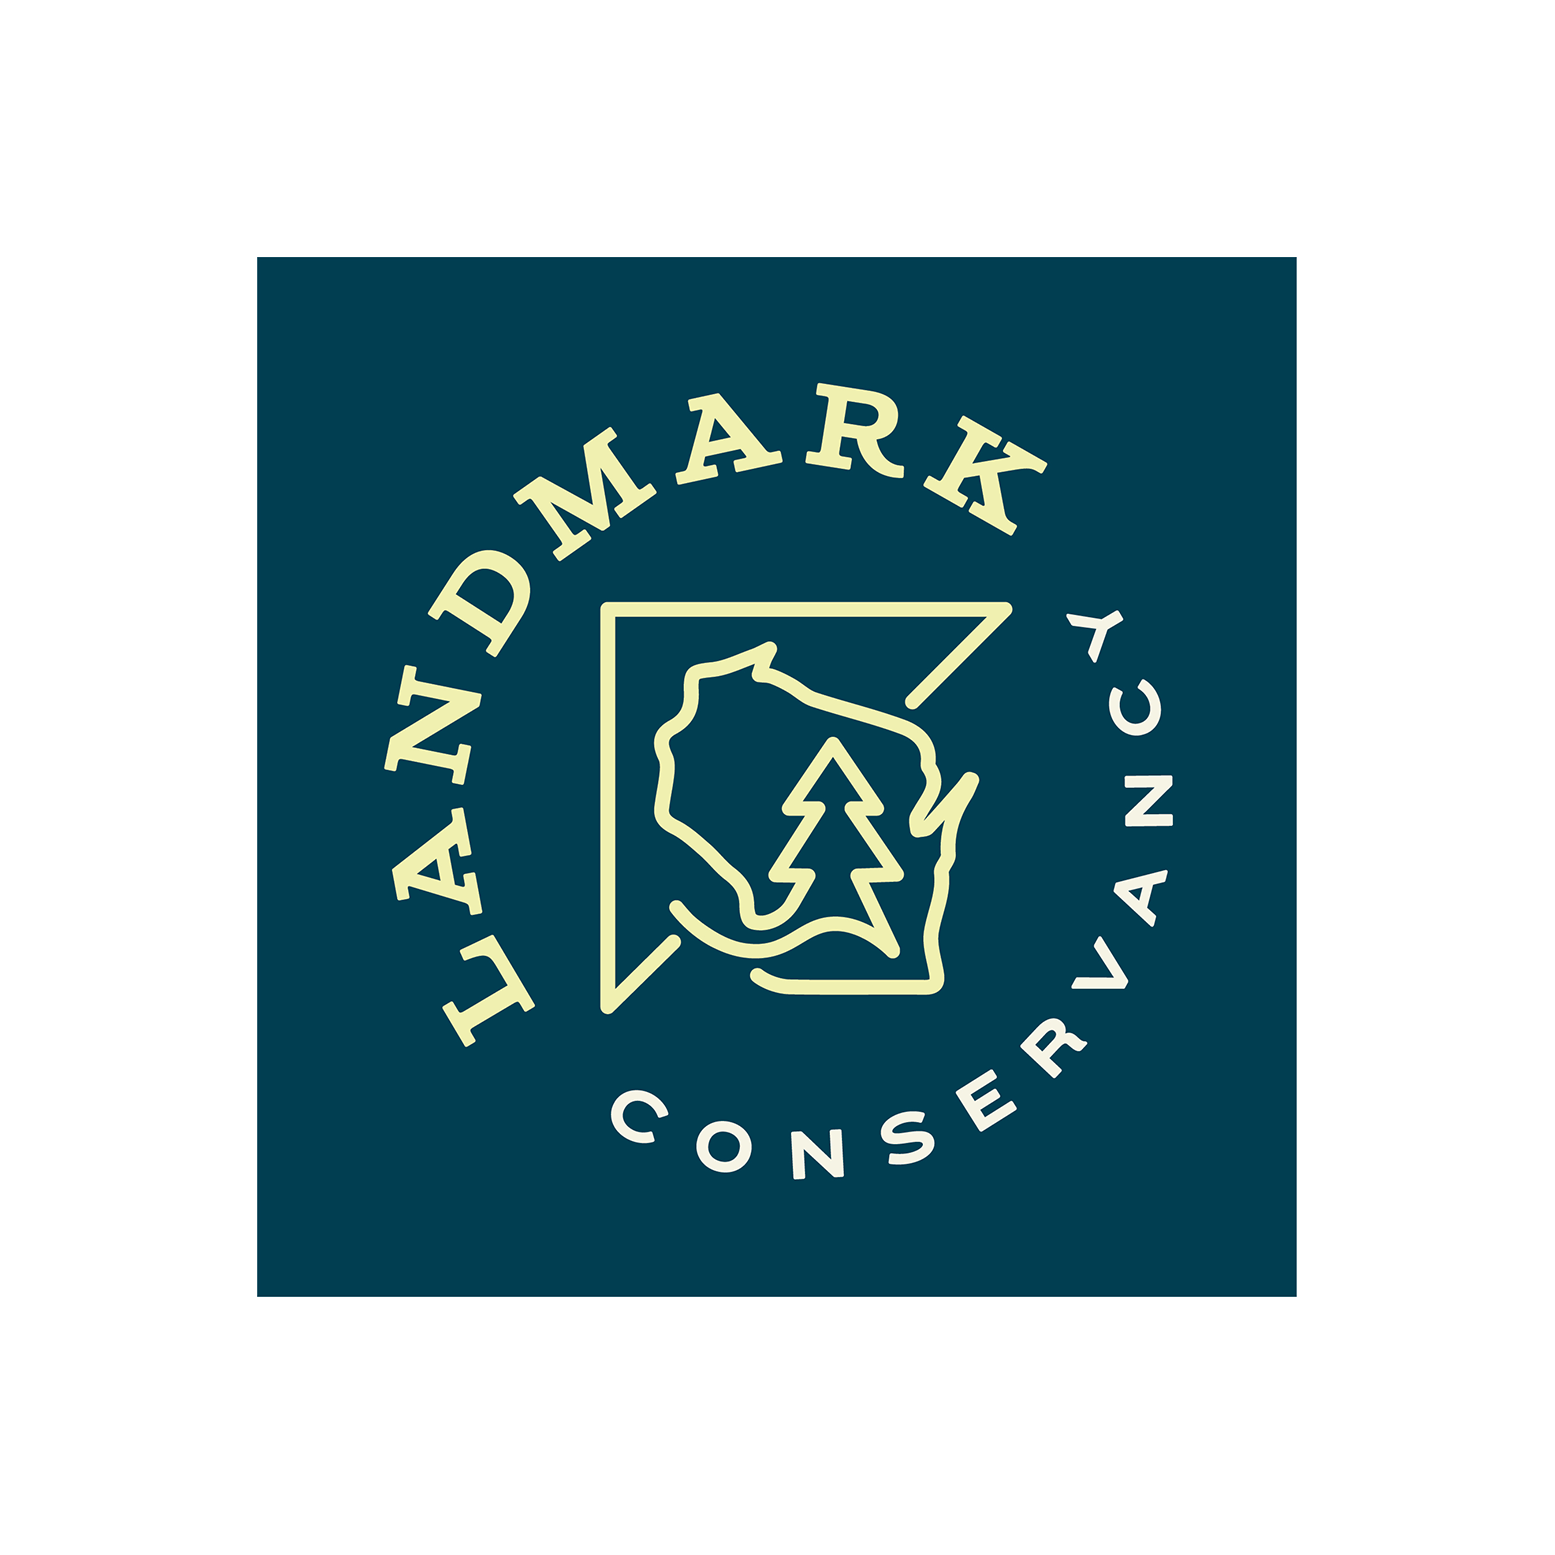 Landmark Conservancy logo